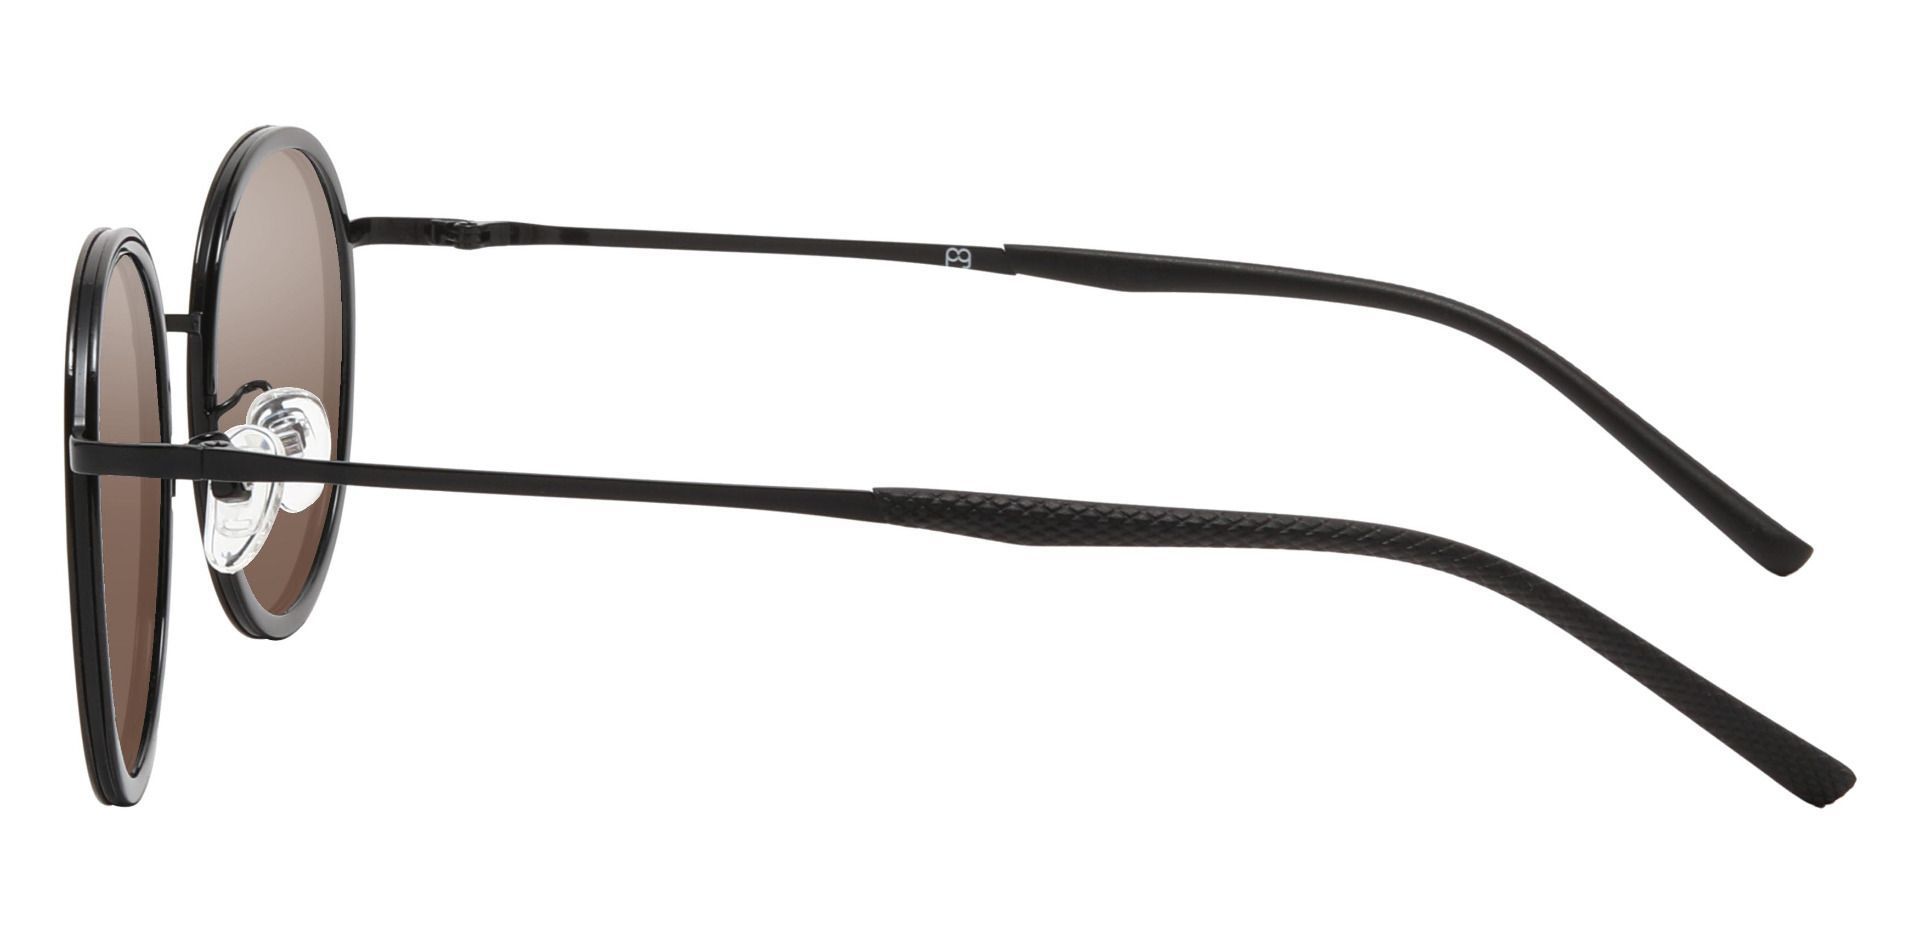 Brunswick Round Non-Rx Sunglasses - Black Frame With Brown Lenses